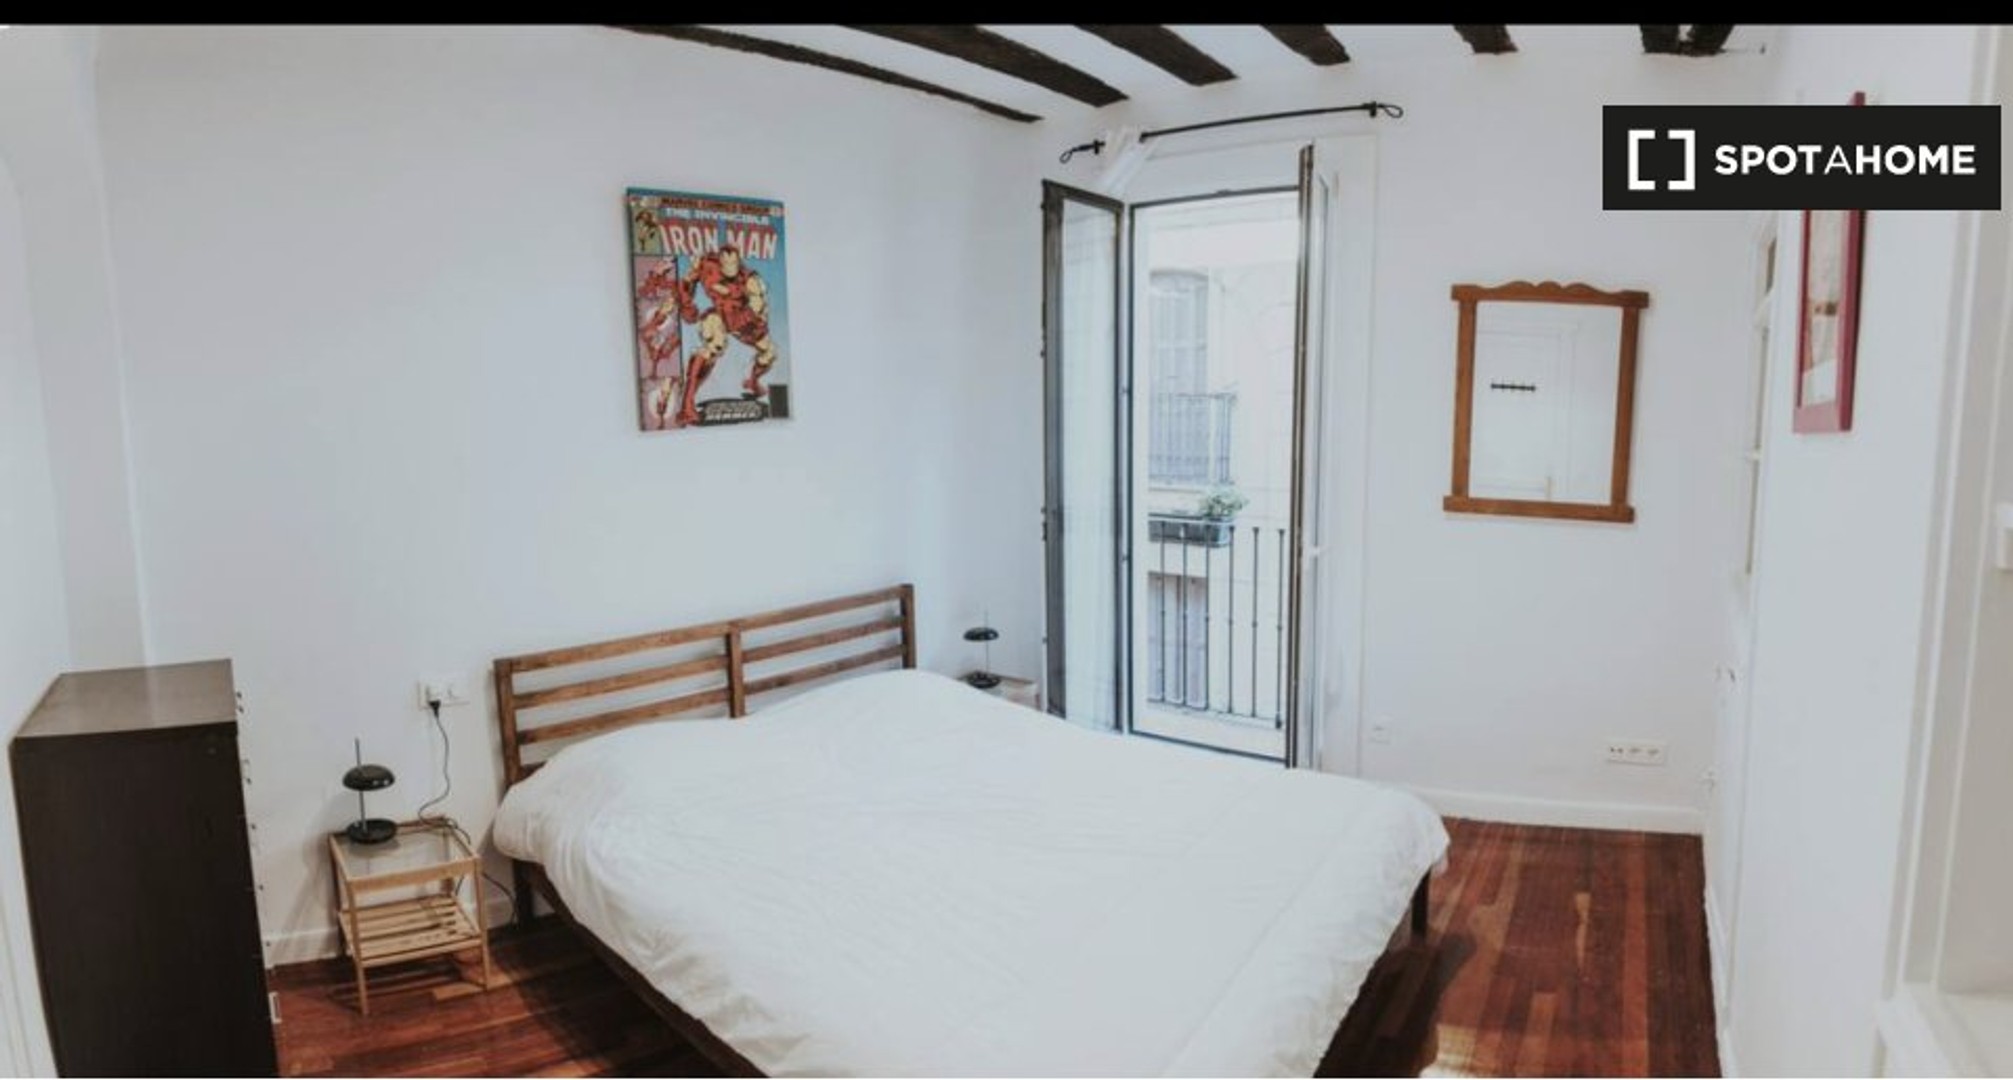 Modern and bright flat in Donostia/san Sebastián